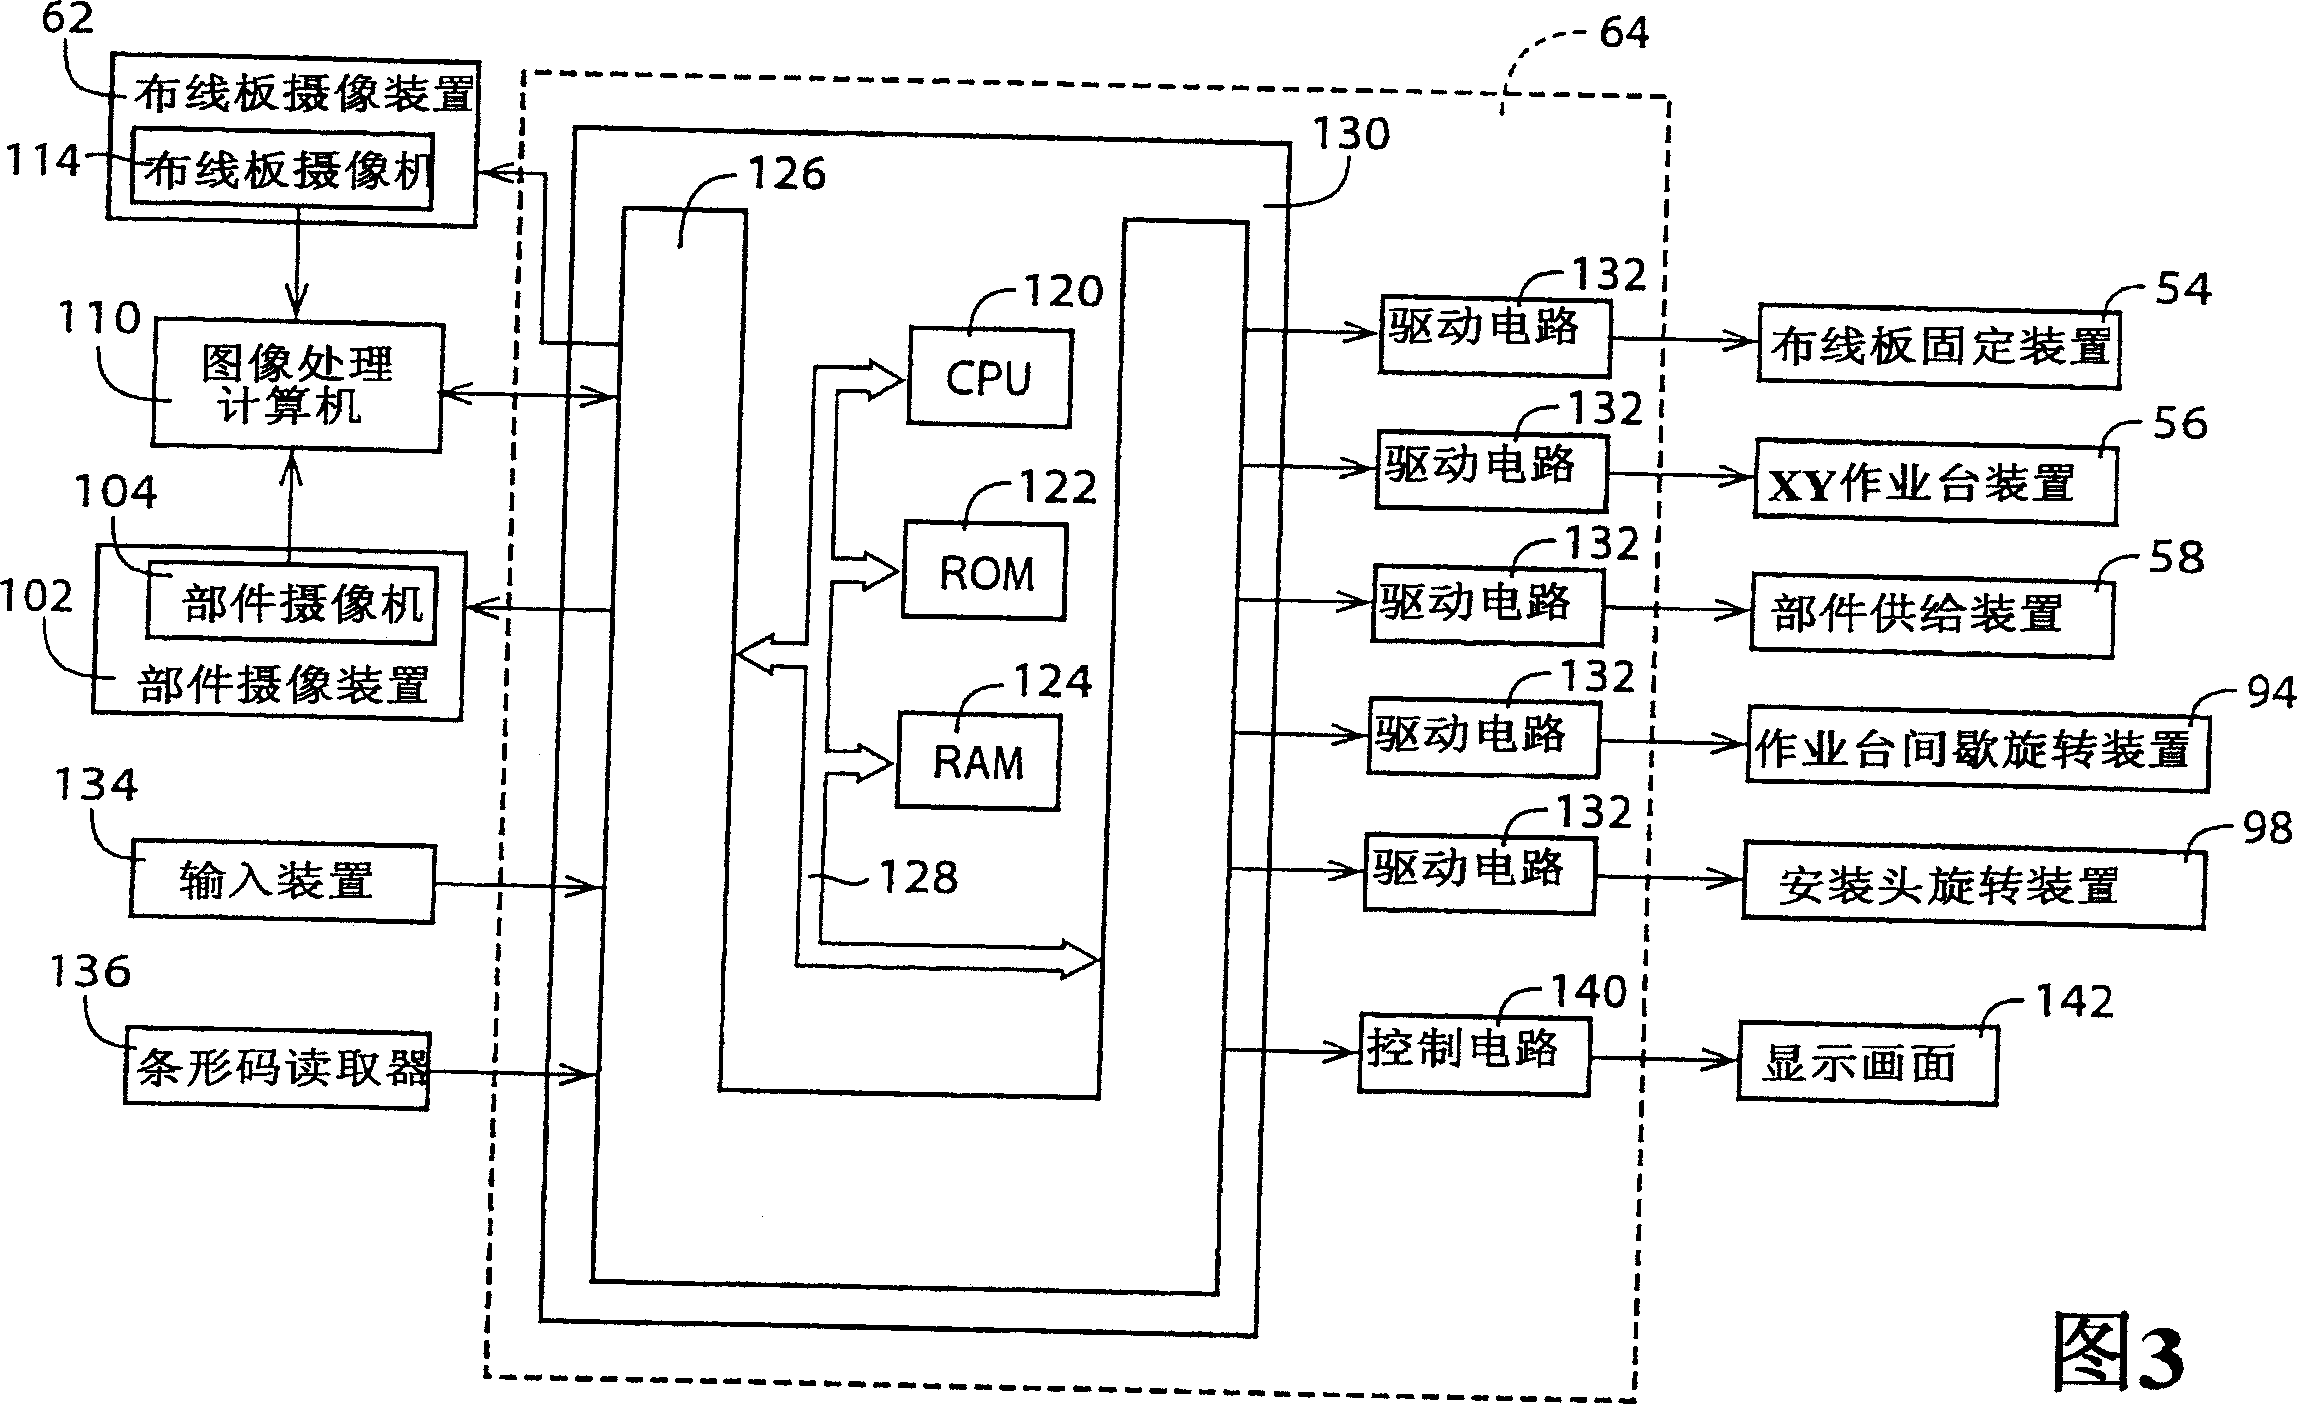 Pair circuit substrate operating machine